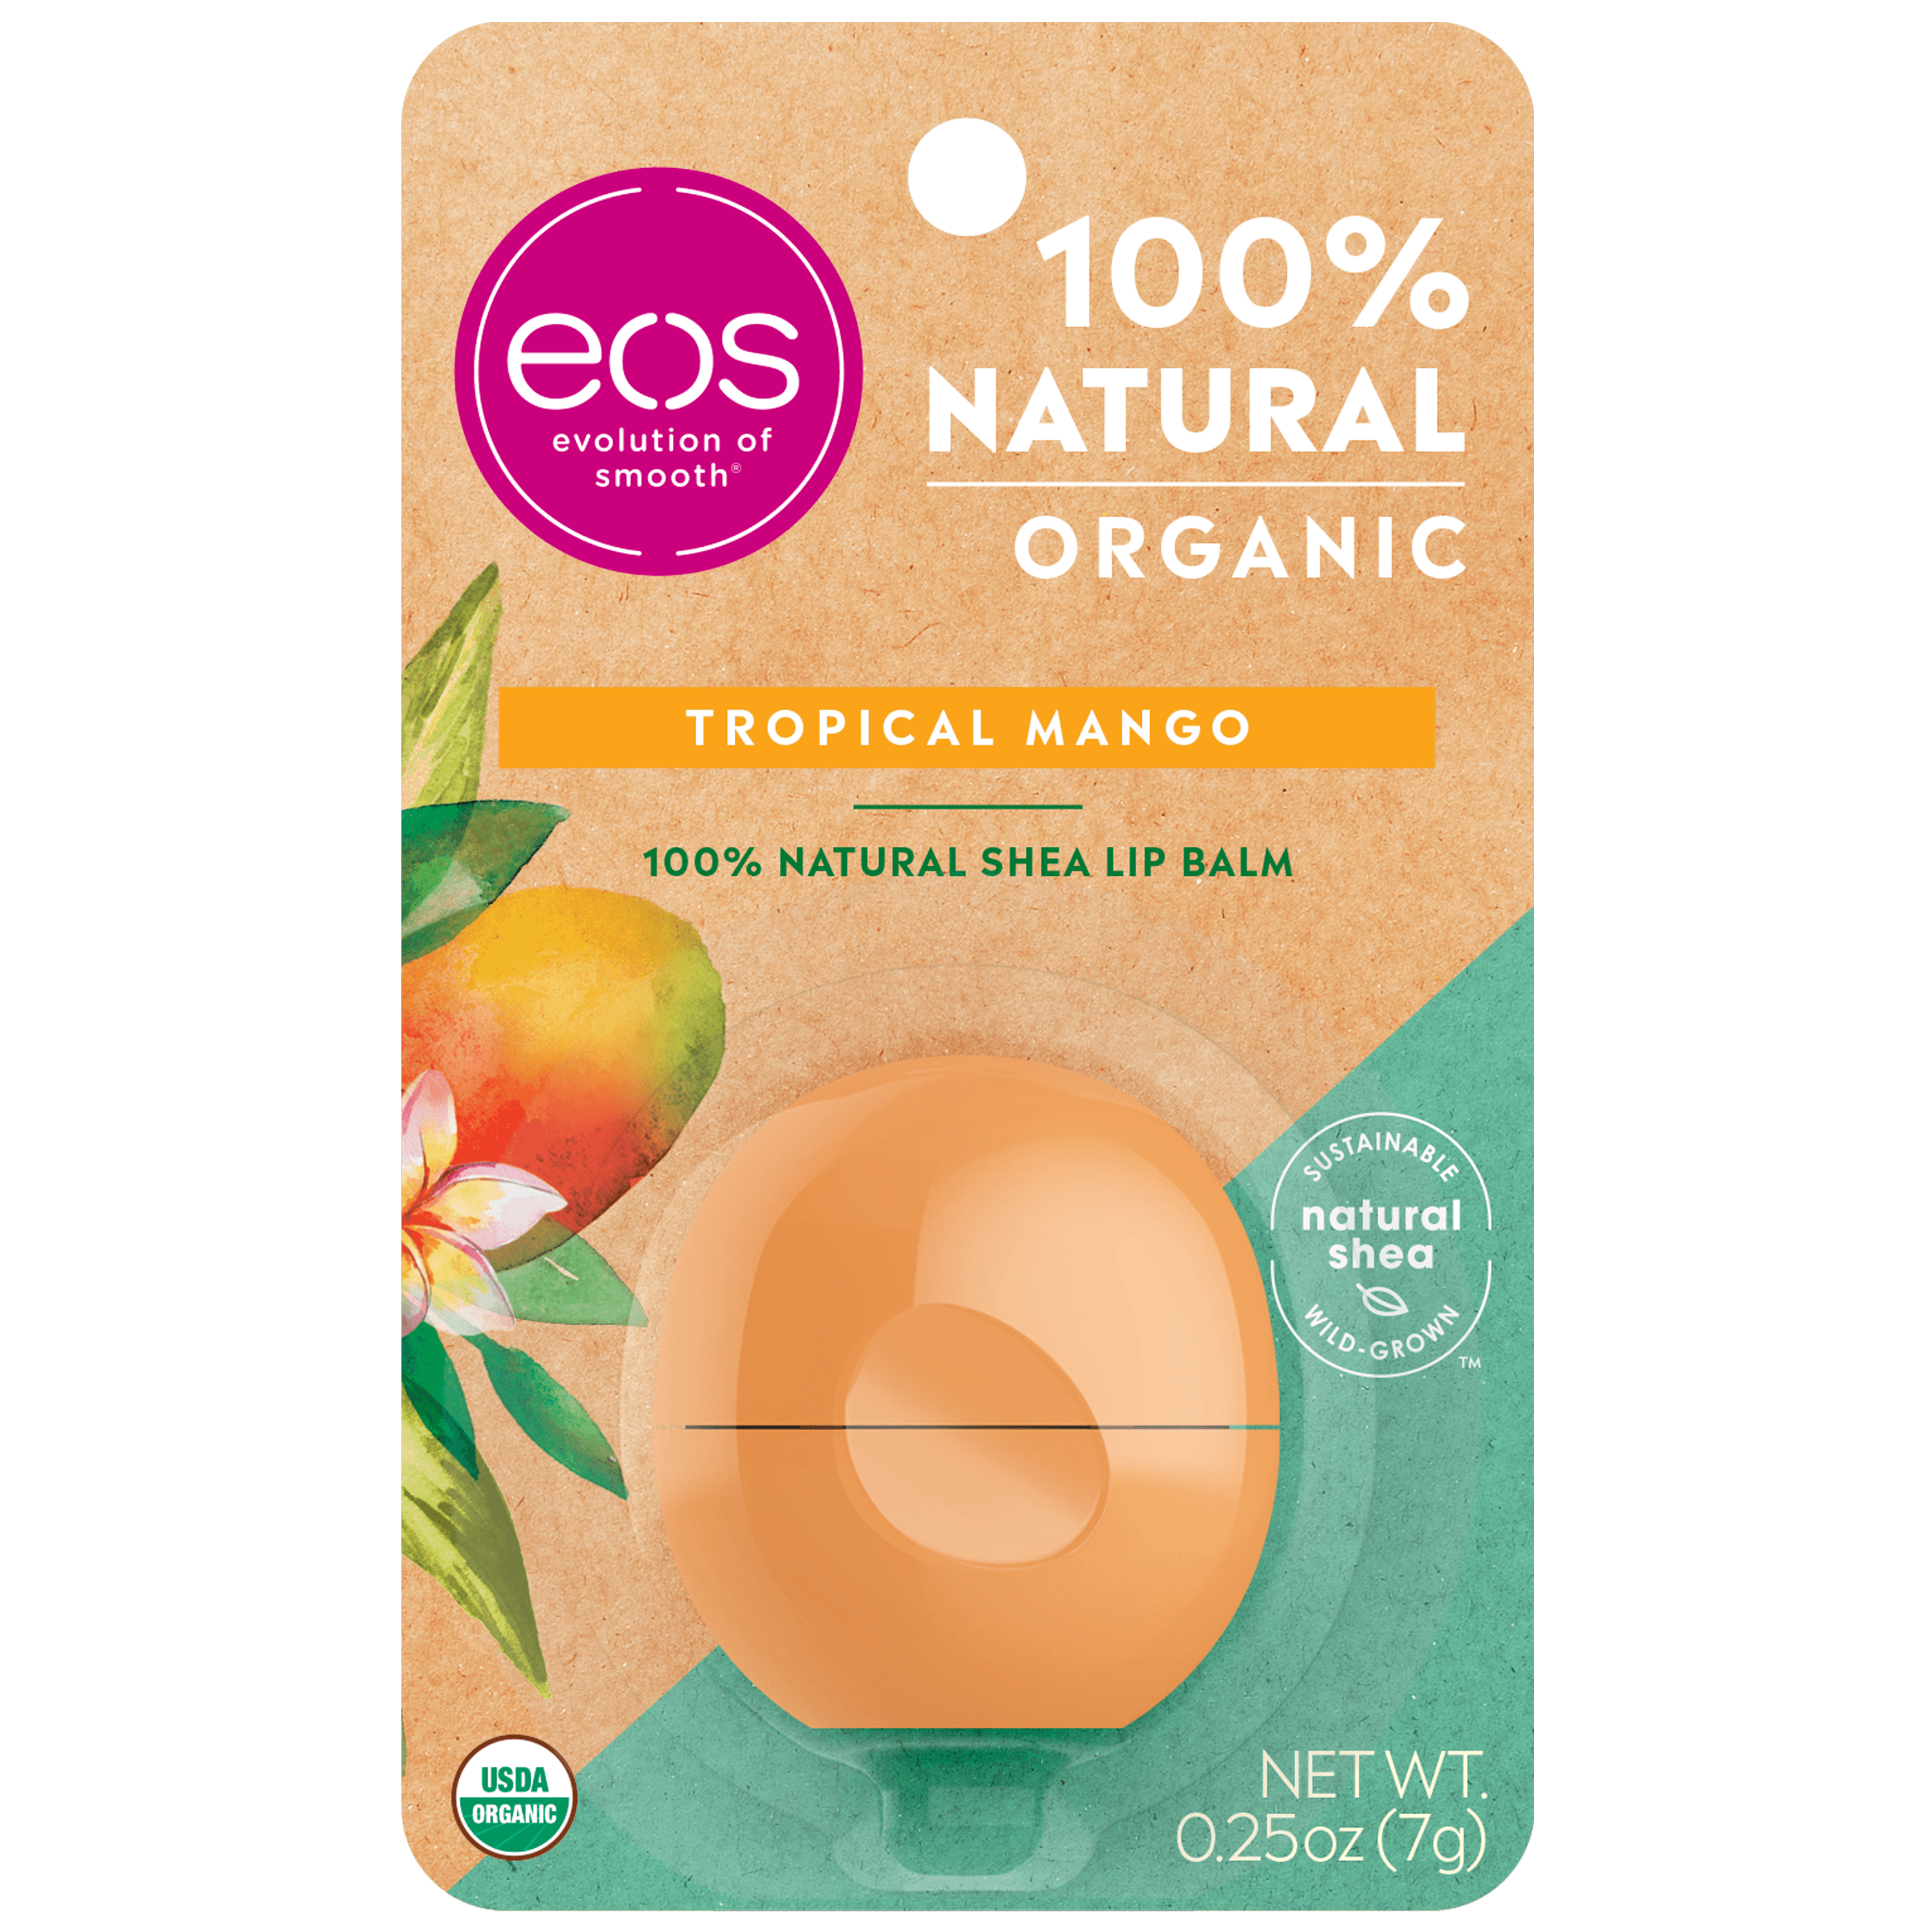 eos 100% Natural & Organic Lip Balm Sphere - Tropical Mango | 0.25 oz - image 1 of 6